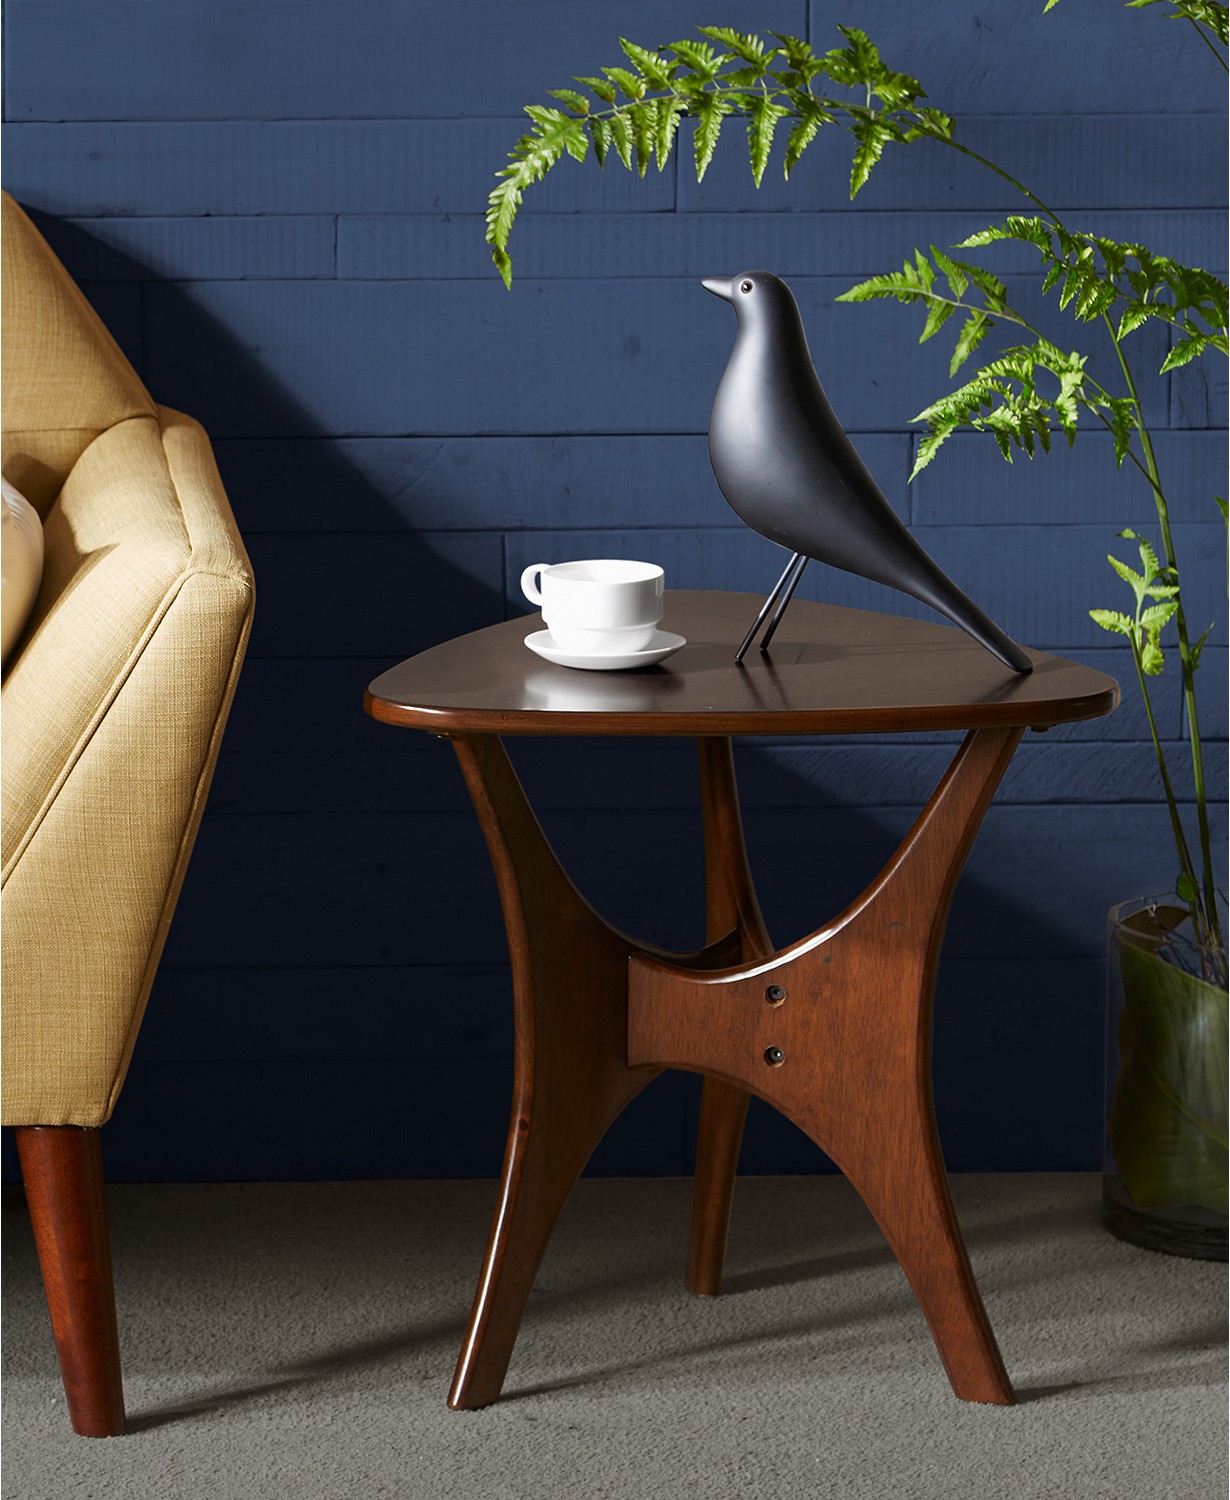 Braxton Side Table, mid-century retro silhouette.